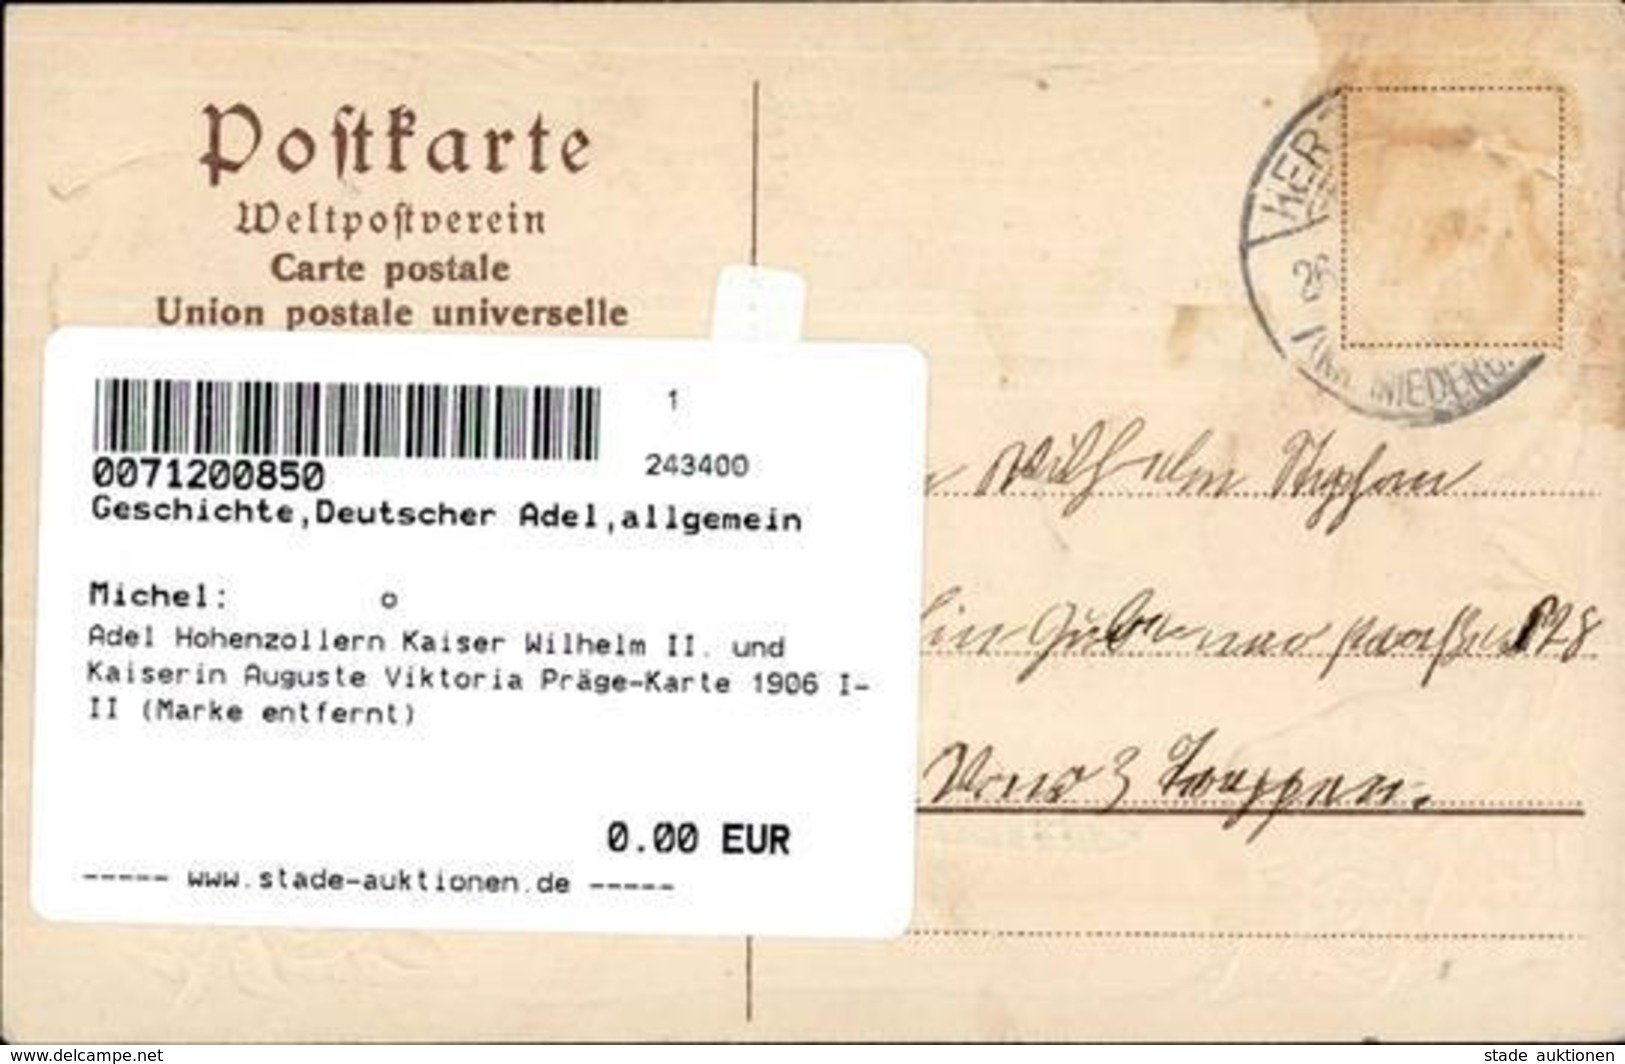 Adel Hohenzollern Kaiser Wilhelm II. Und Kaiserin Auguste Viktoria Präge-Karte 1906 I-II (Marke Entfernt) - Königshäuser